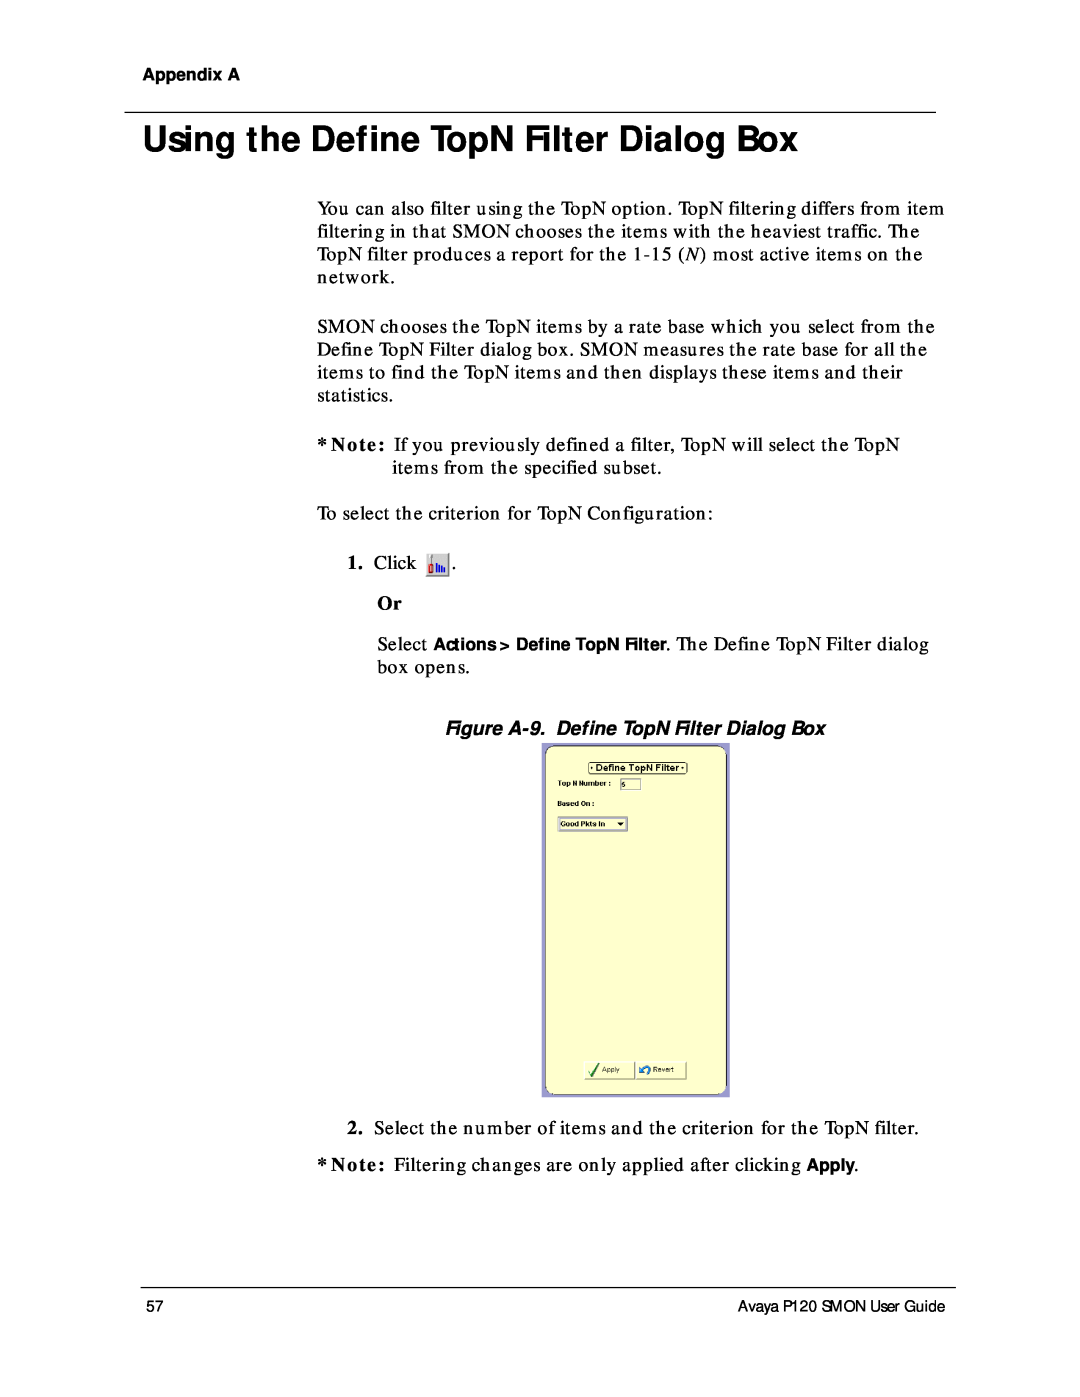 Avaya P120 SMON manual Using the Define TopN Filter Dialog Box, Figure A-9. Define TopN Filter Dialog Box 